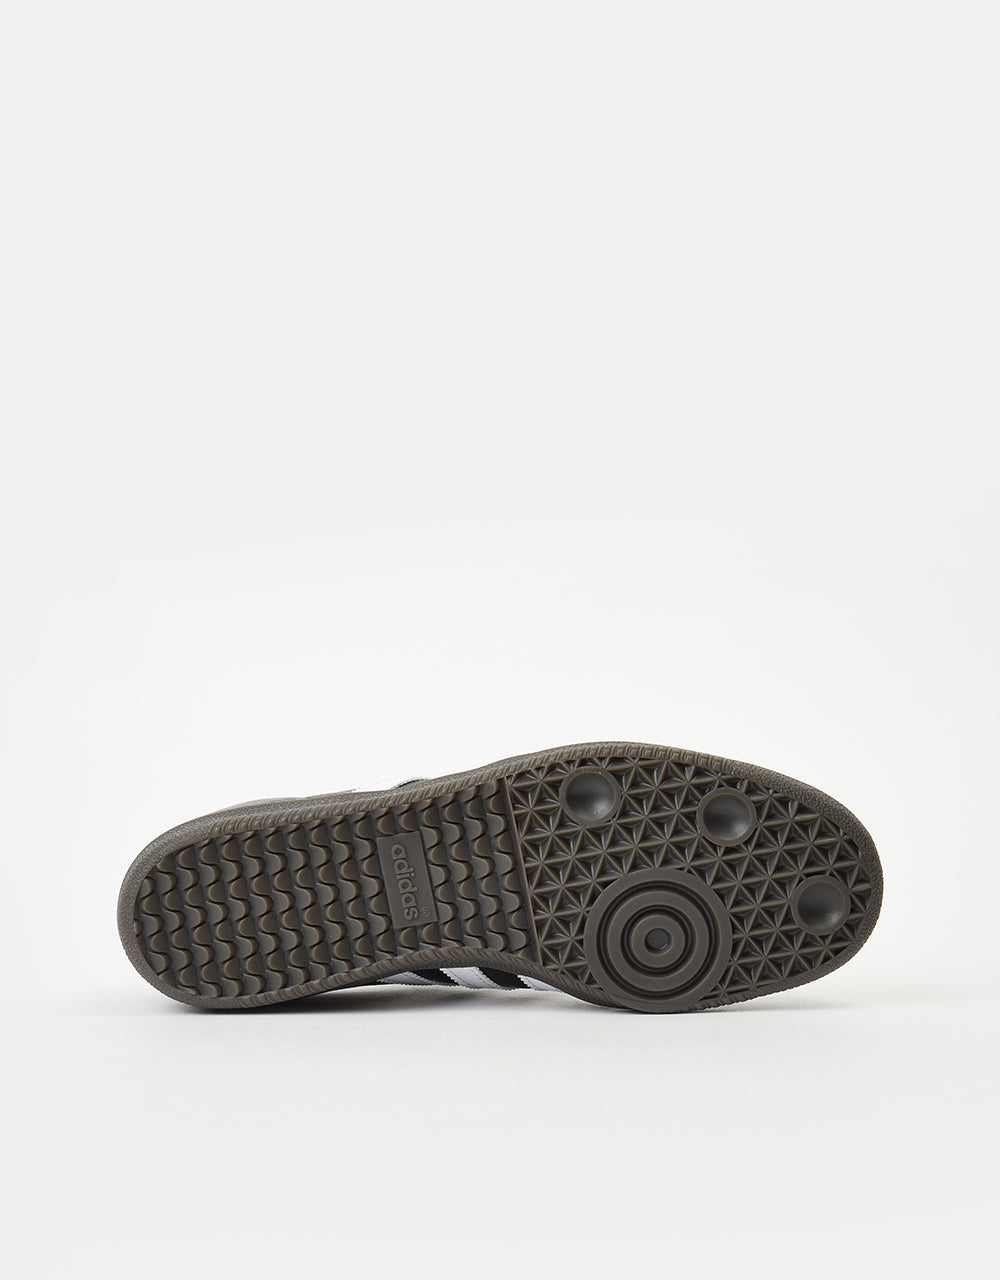 Adidas Samba ADV Skate Shoes - Core Black/White/Gum